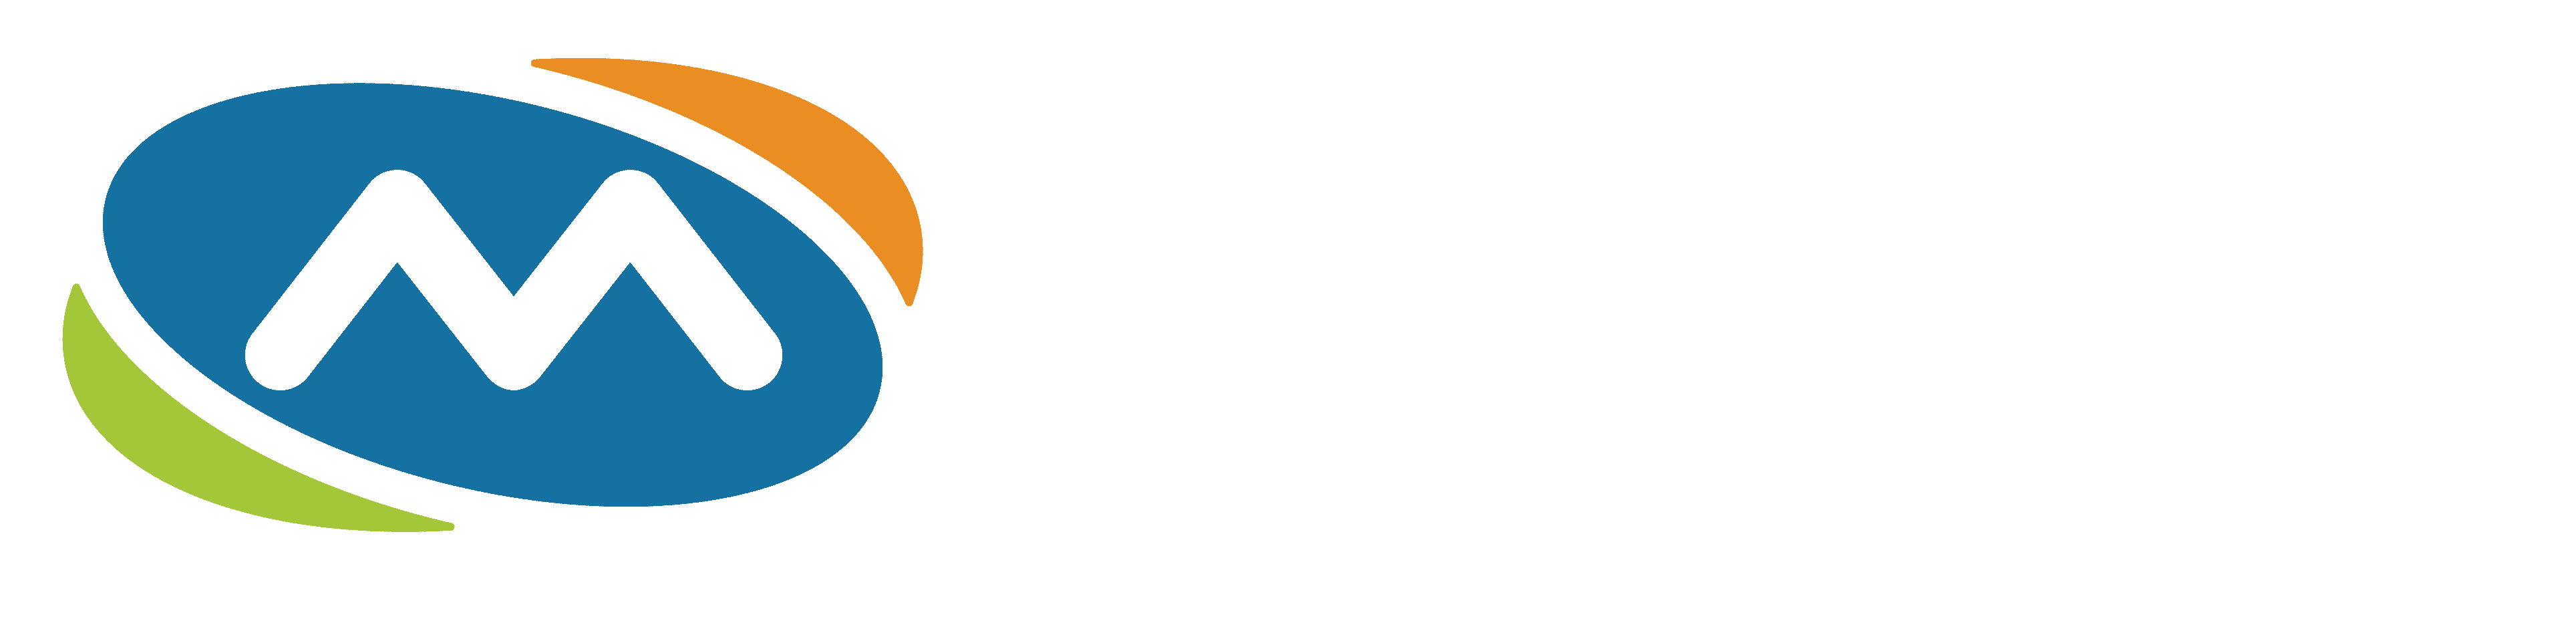 logo megabyte